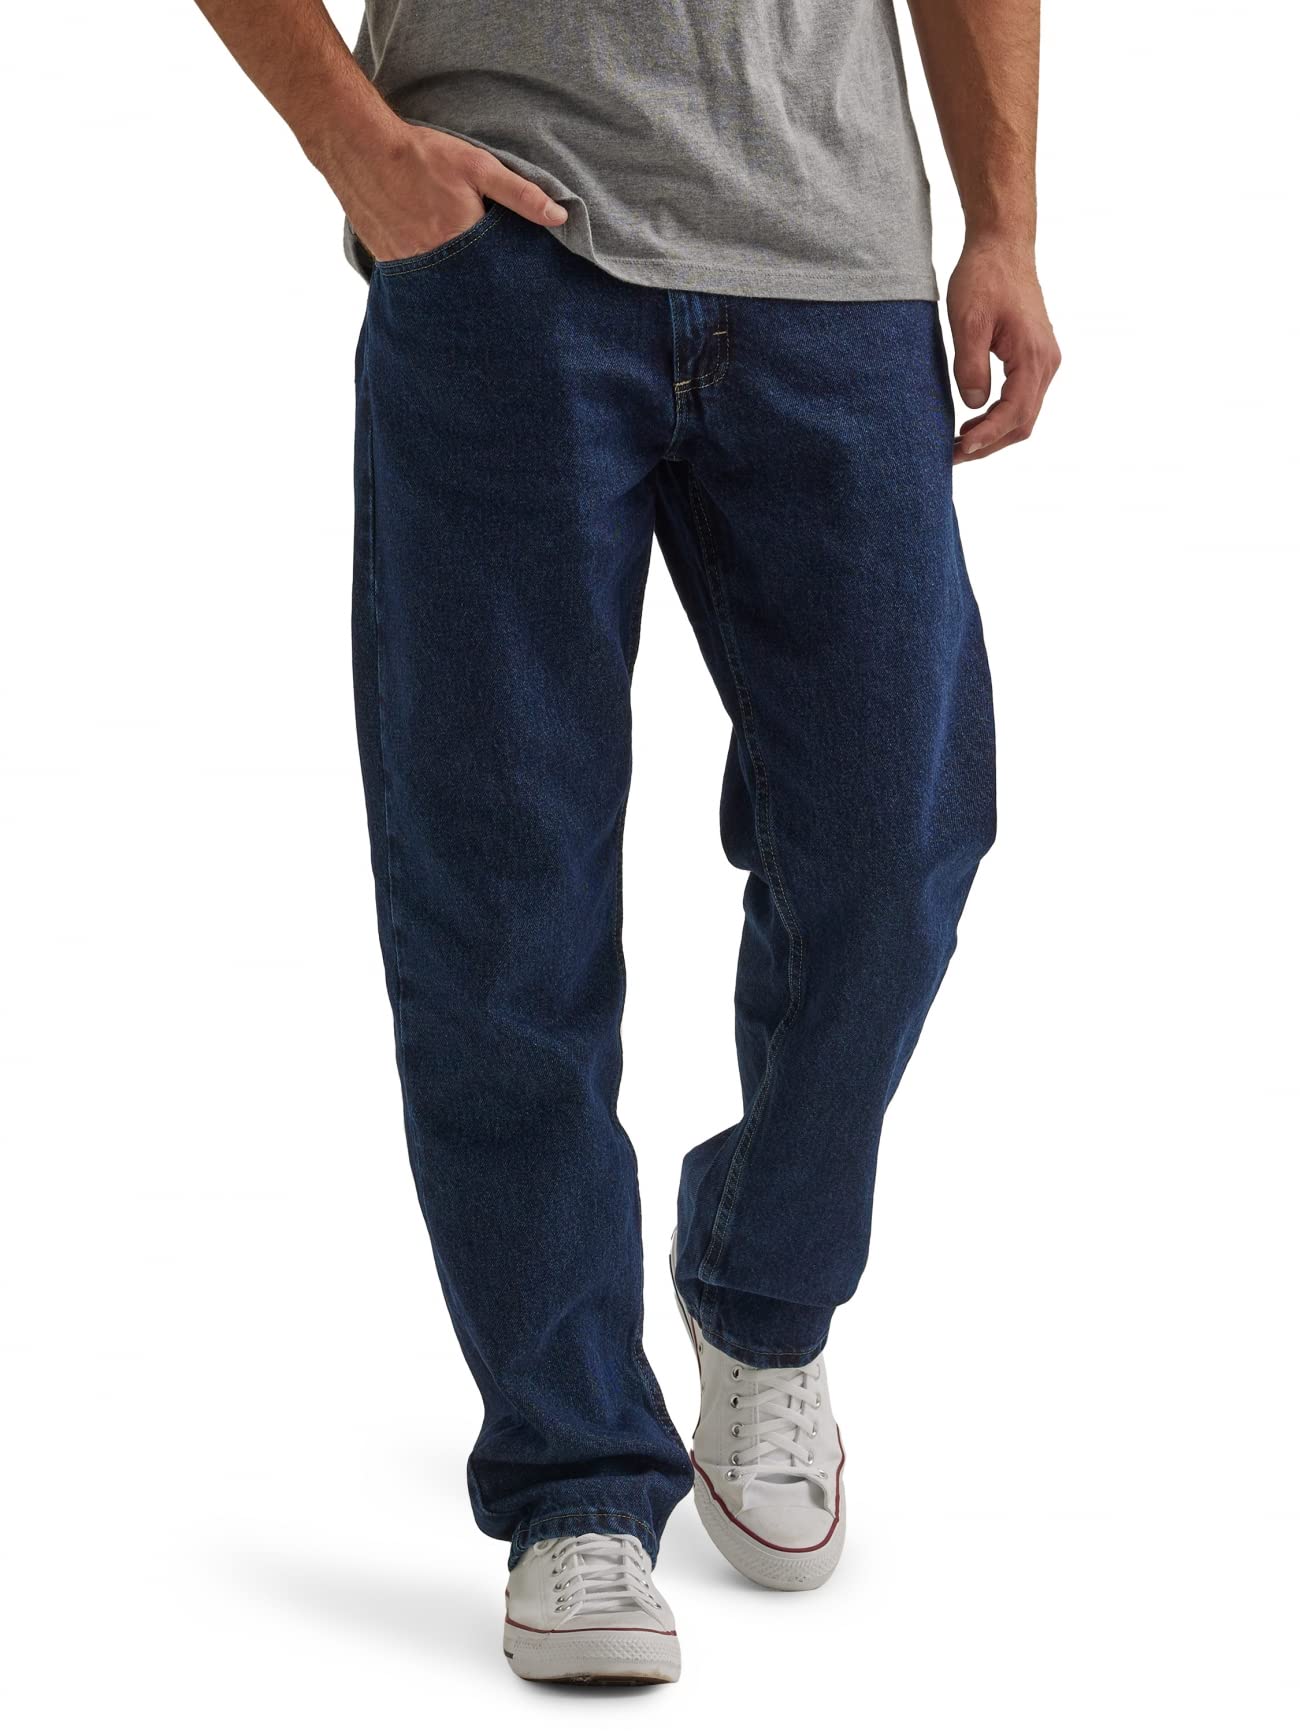 Wrangler Authentics Men's Classic 5-Pocket Relaxed Fit Cotton Jean, Dark Rinse, 40W X 36L